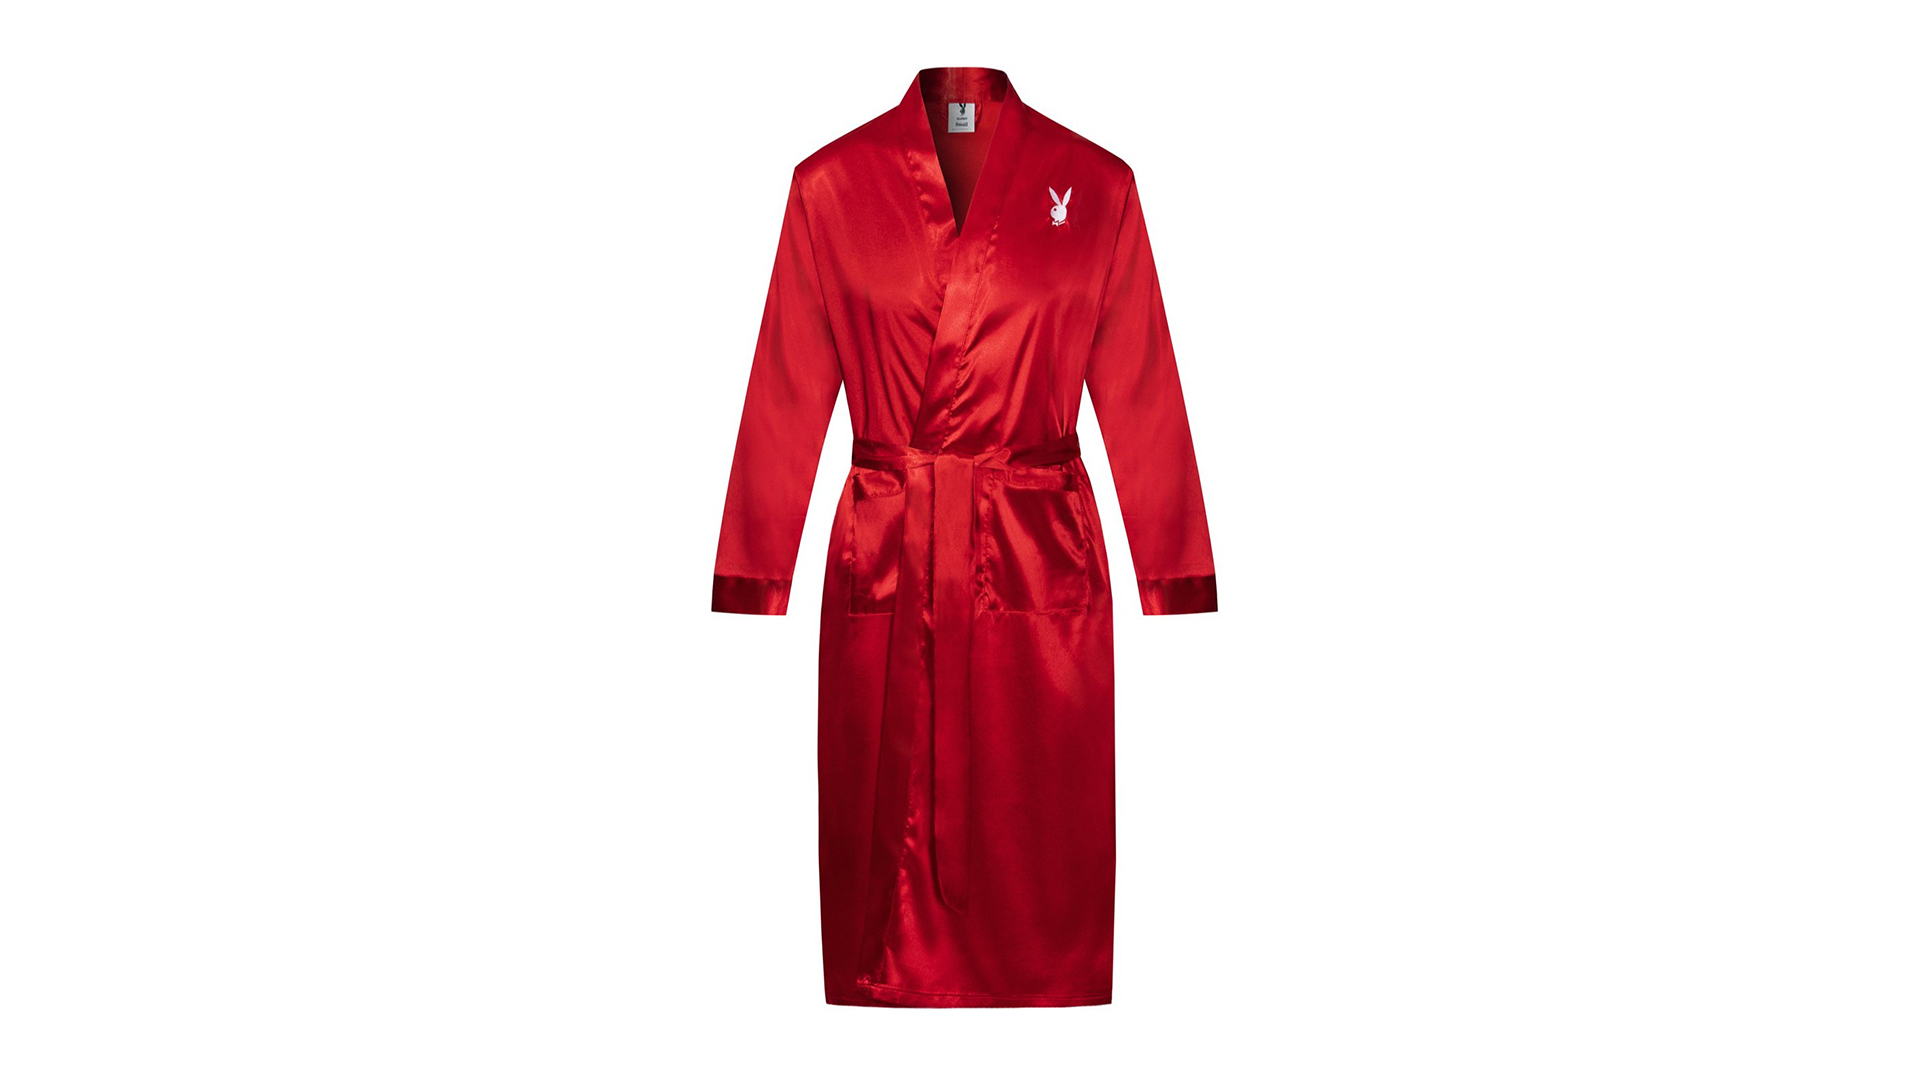 Playboy Red Satin Robe Valentine Gift Guide